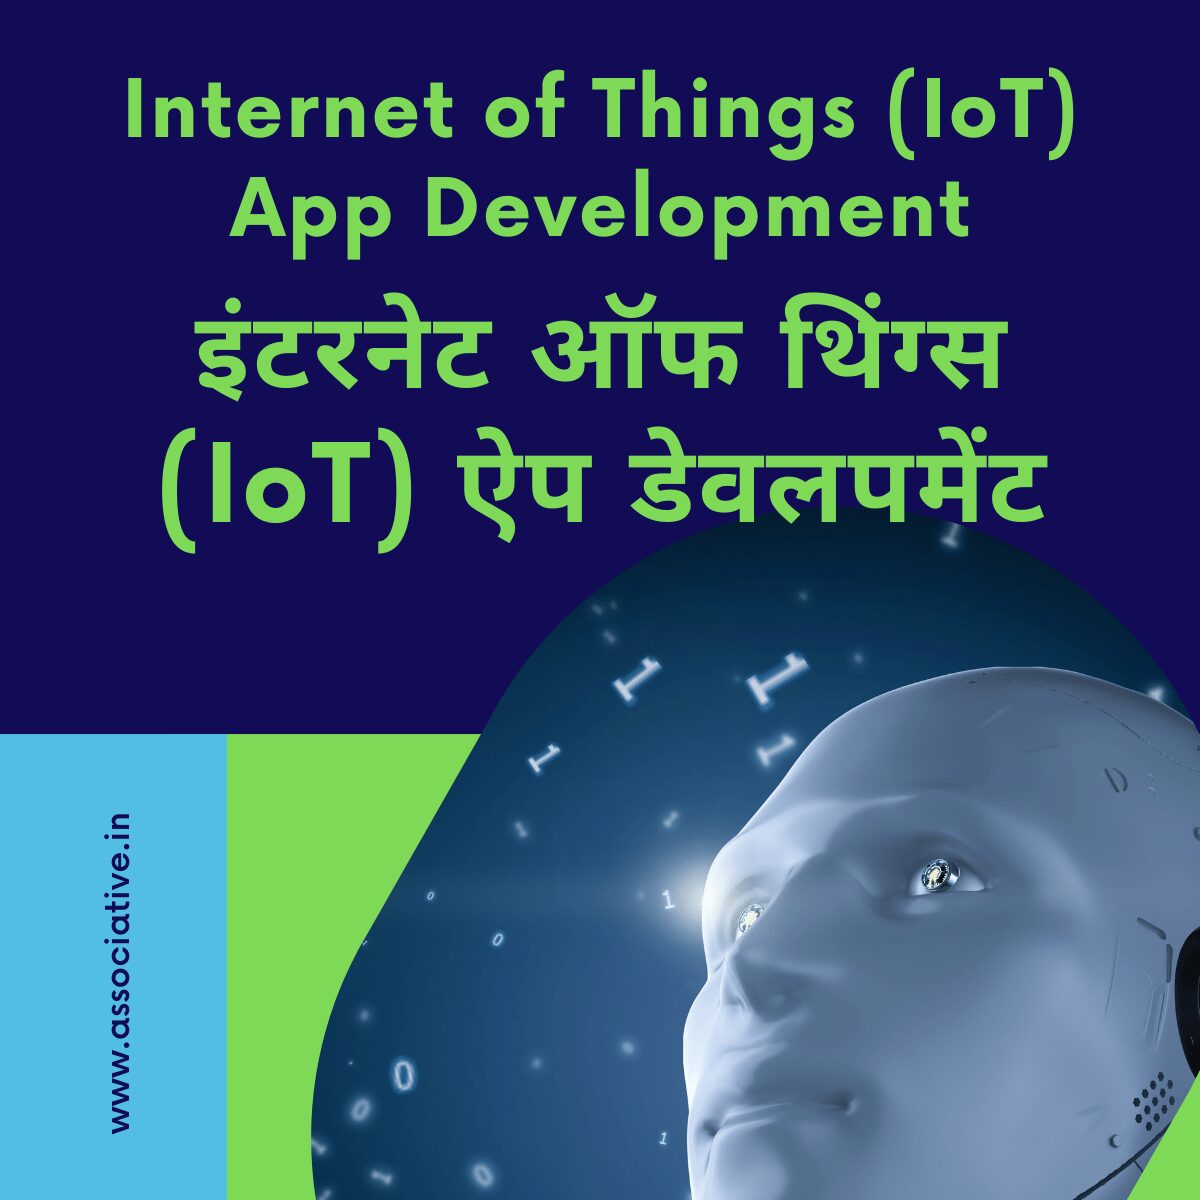 Internet of Things (IoT) App Development इंटरनेट ऑफ थिंग्स (IoT) ऐप डेवलपमेंट